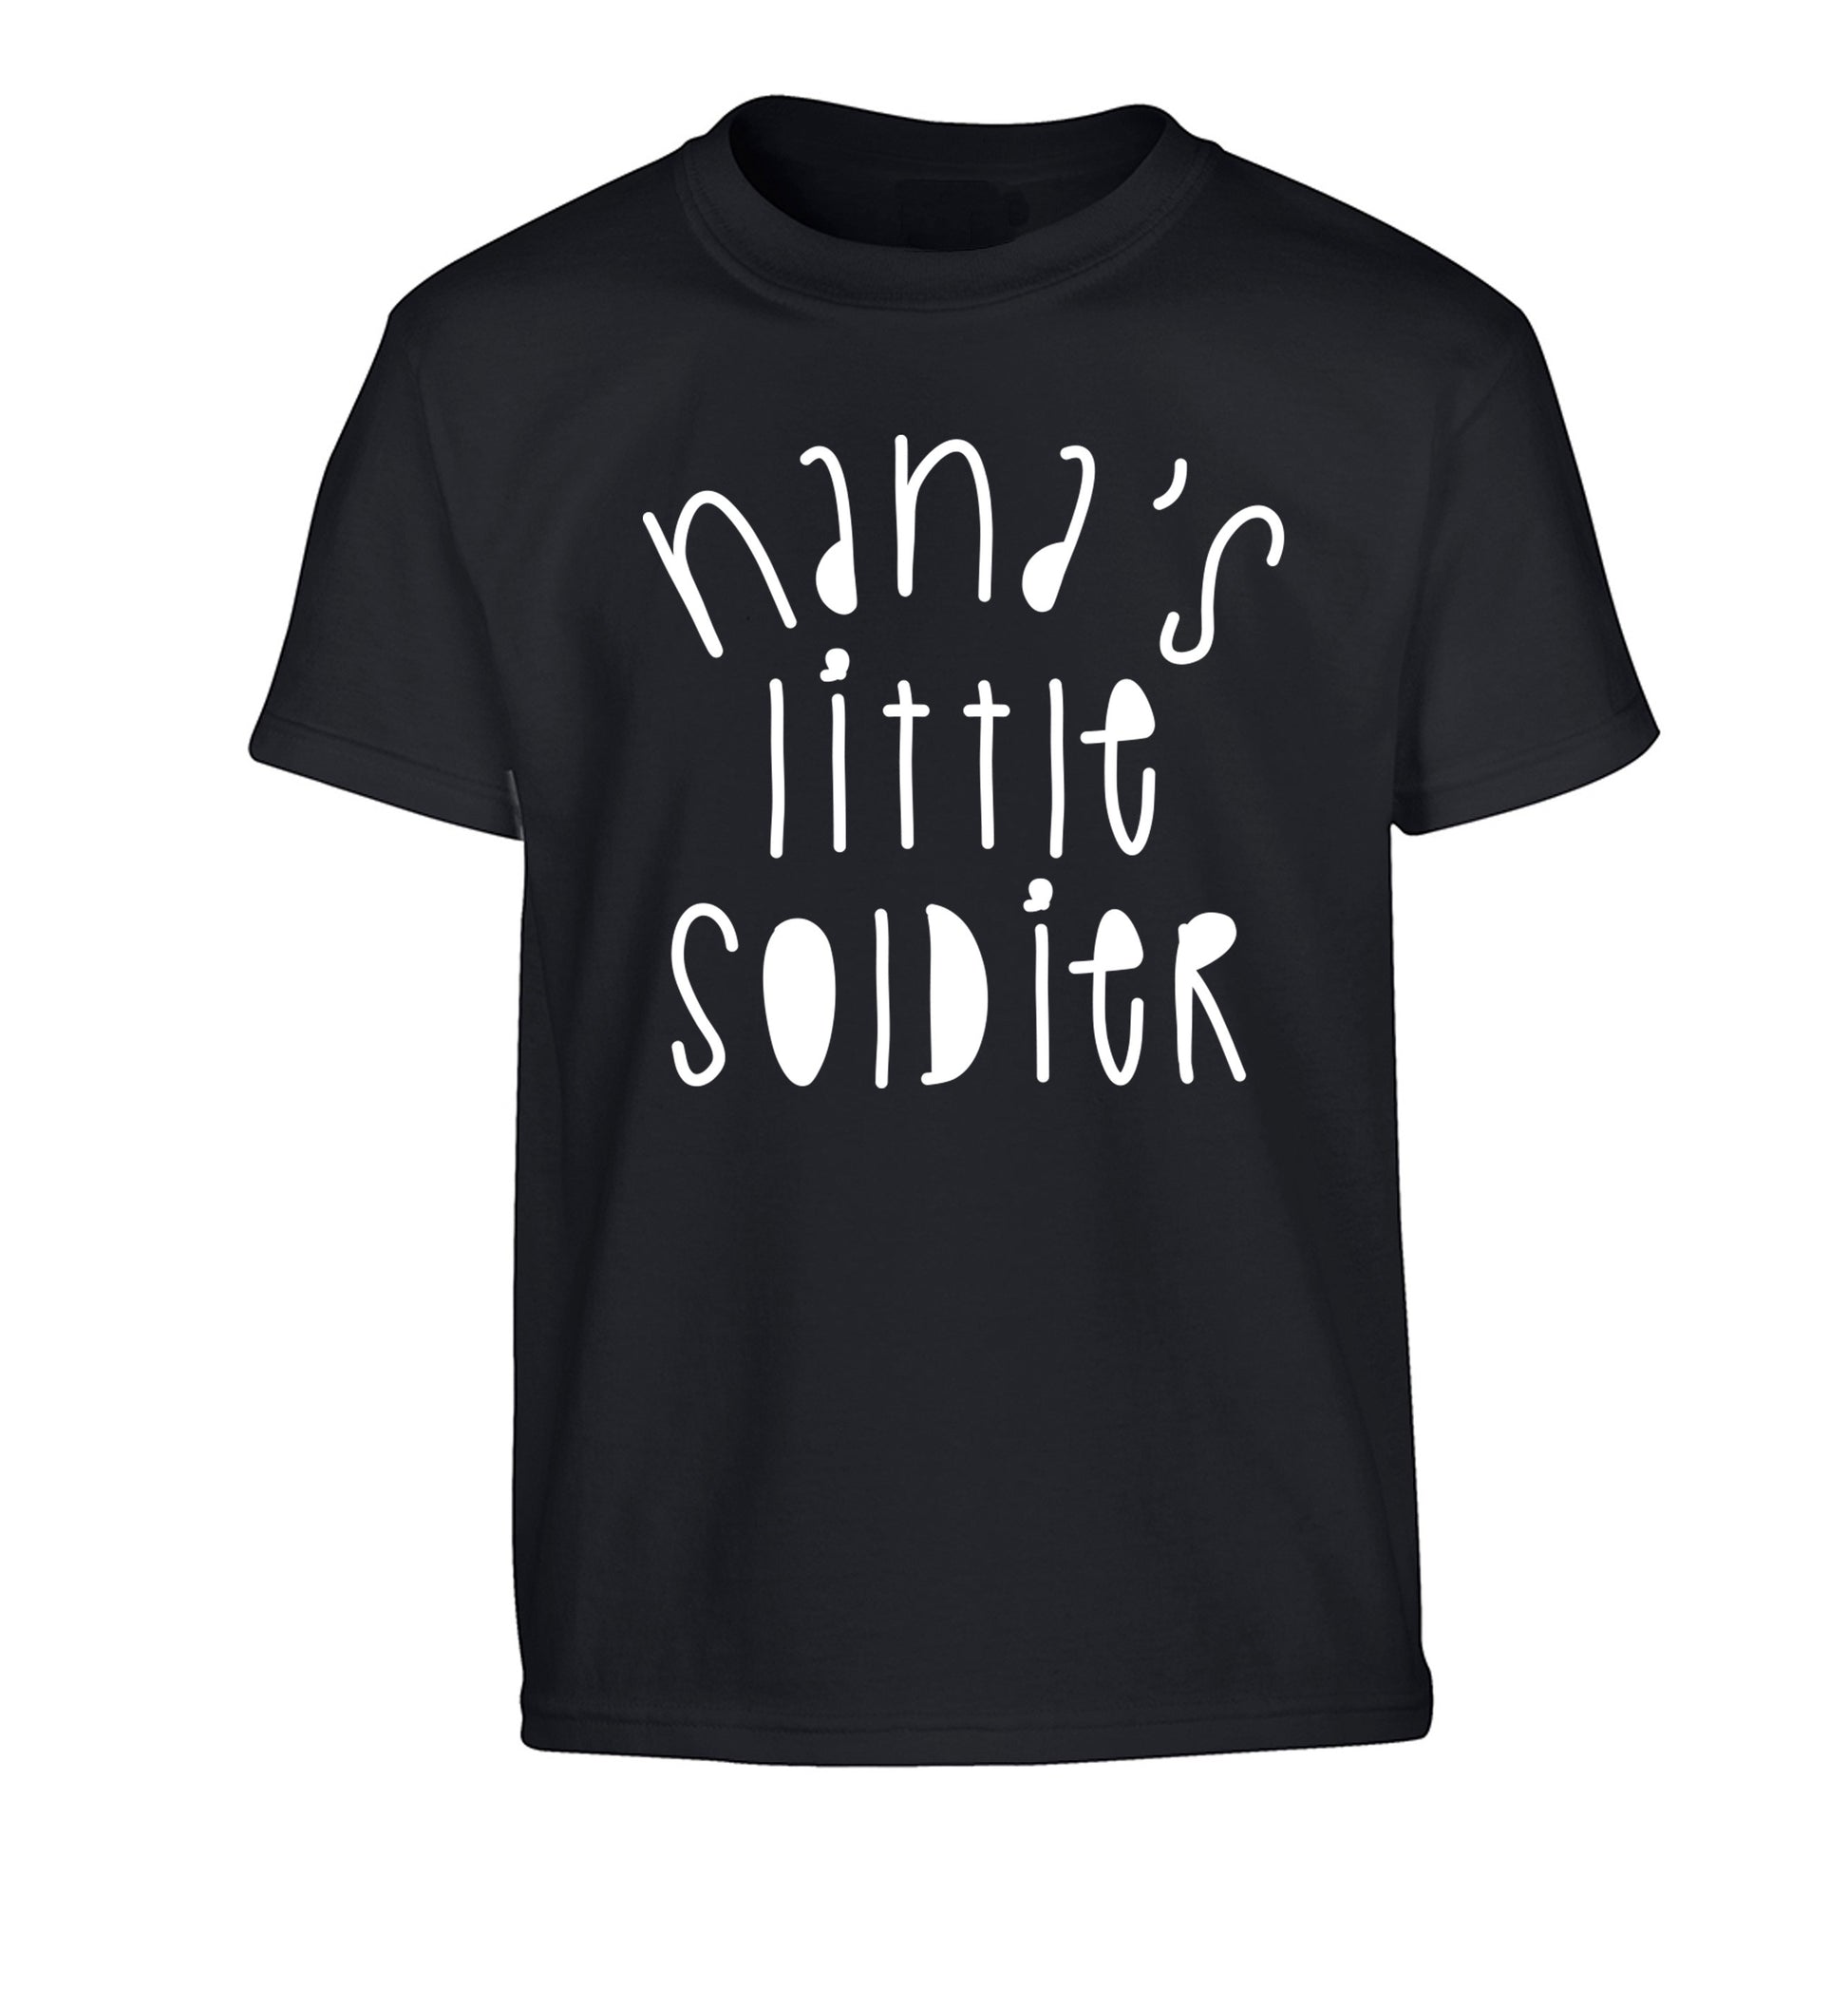 Nana's little soldier Children's black Tshirt 12-14 Years